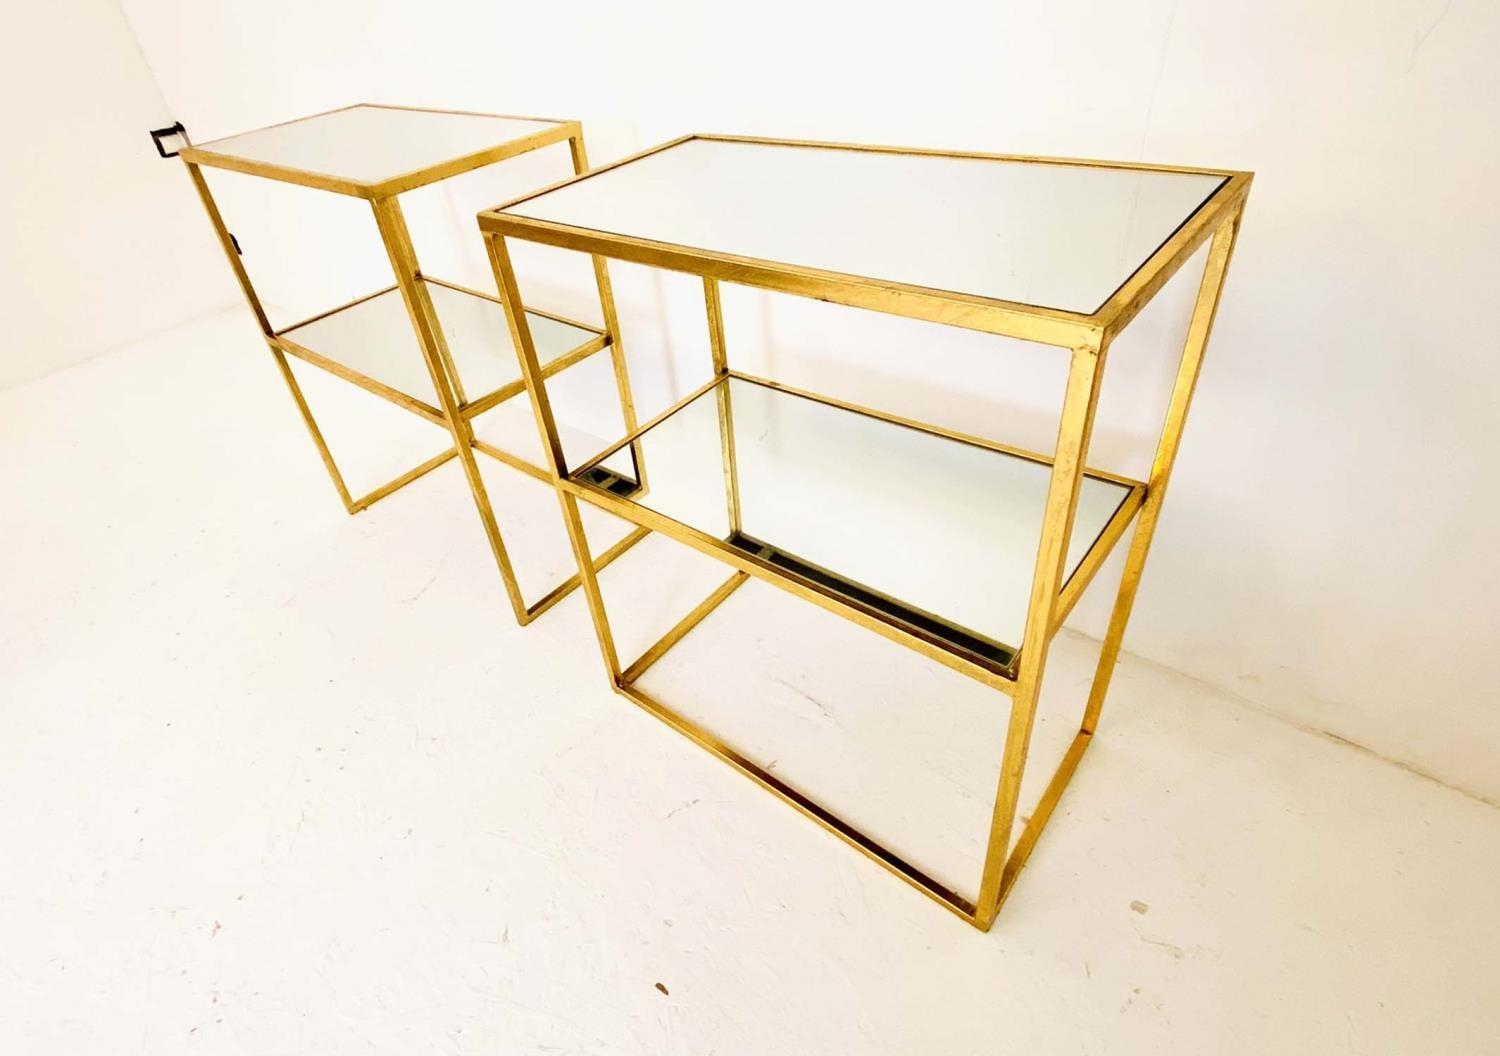 SIDE TABLES, a pair, 51cm x 28cm x 61cm, mirrored glass shelves, gilt metal frames. (2) - Image 3 of 4